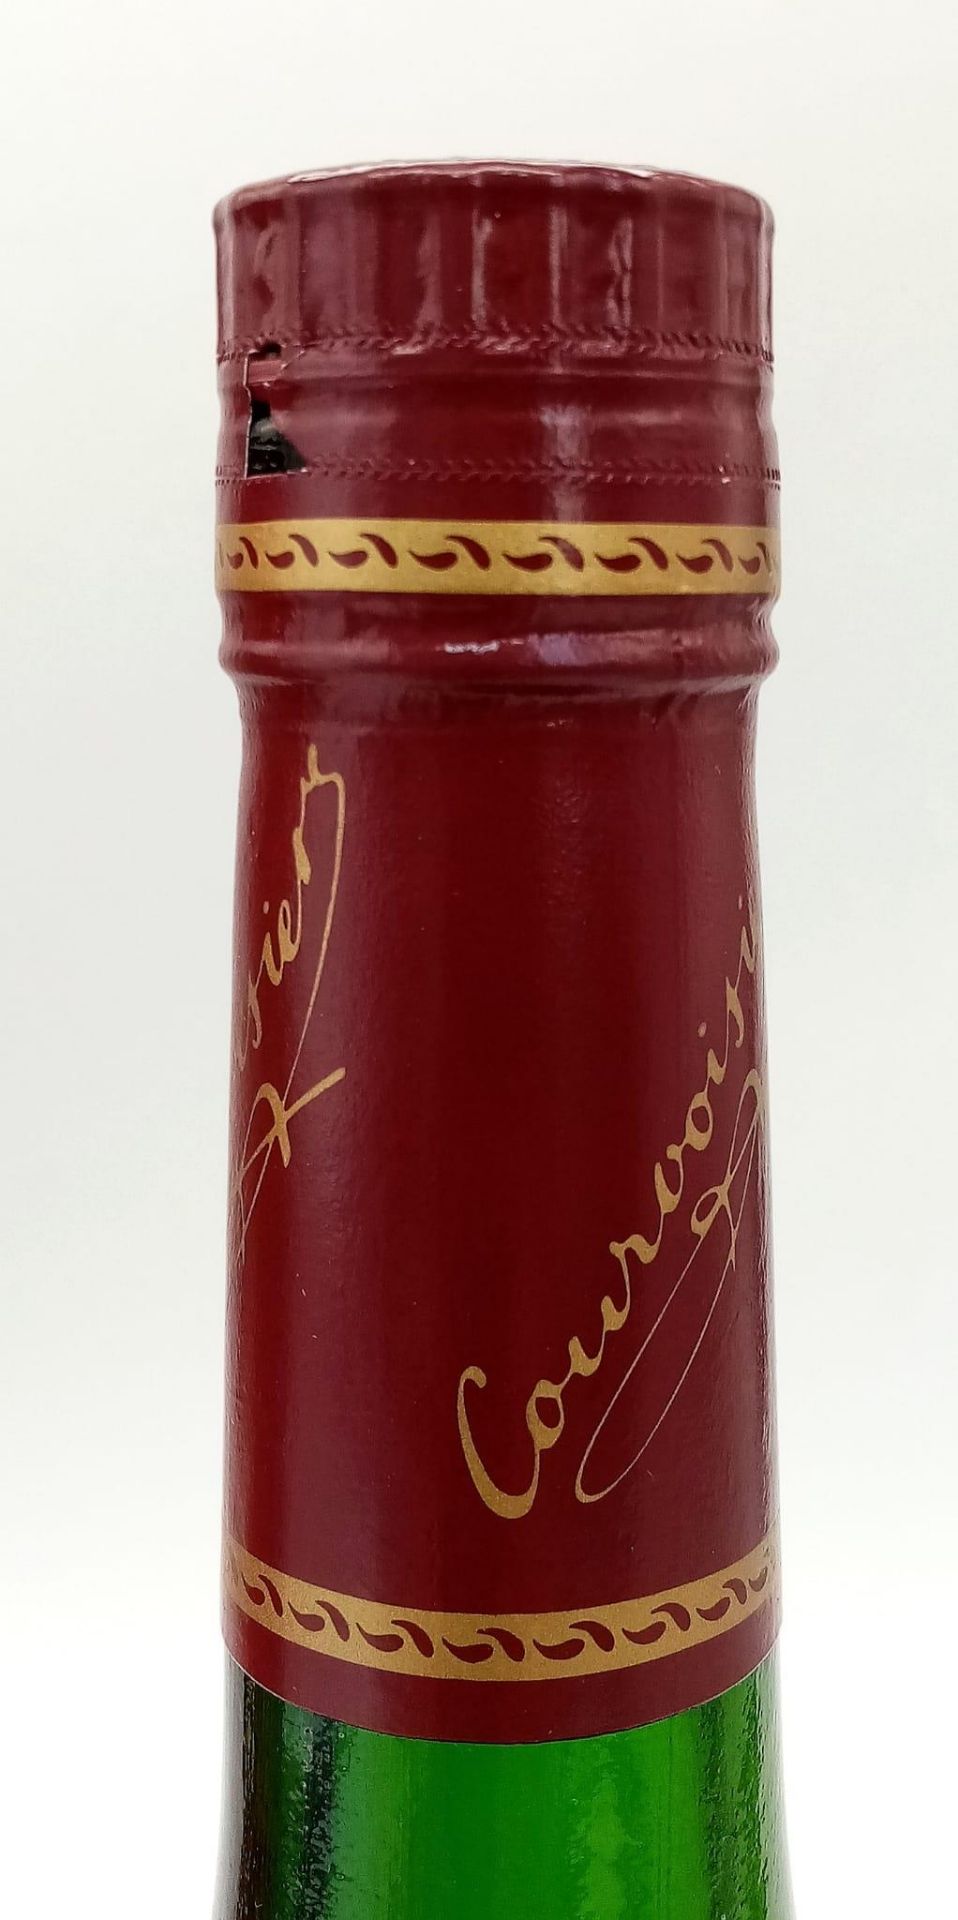 A 1 Litre Bottle of Courvosier Luxe Cognac. In original packaging. - Image 4 of 5